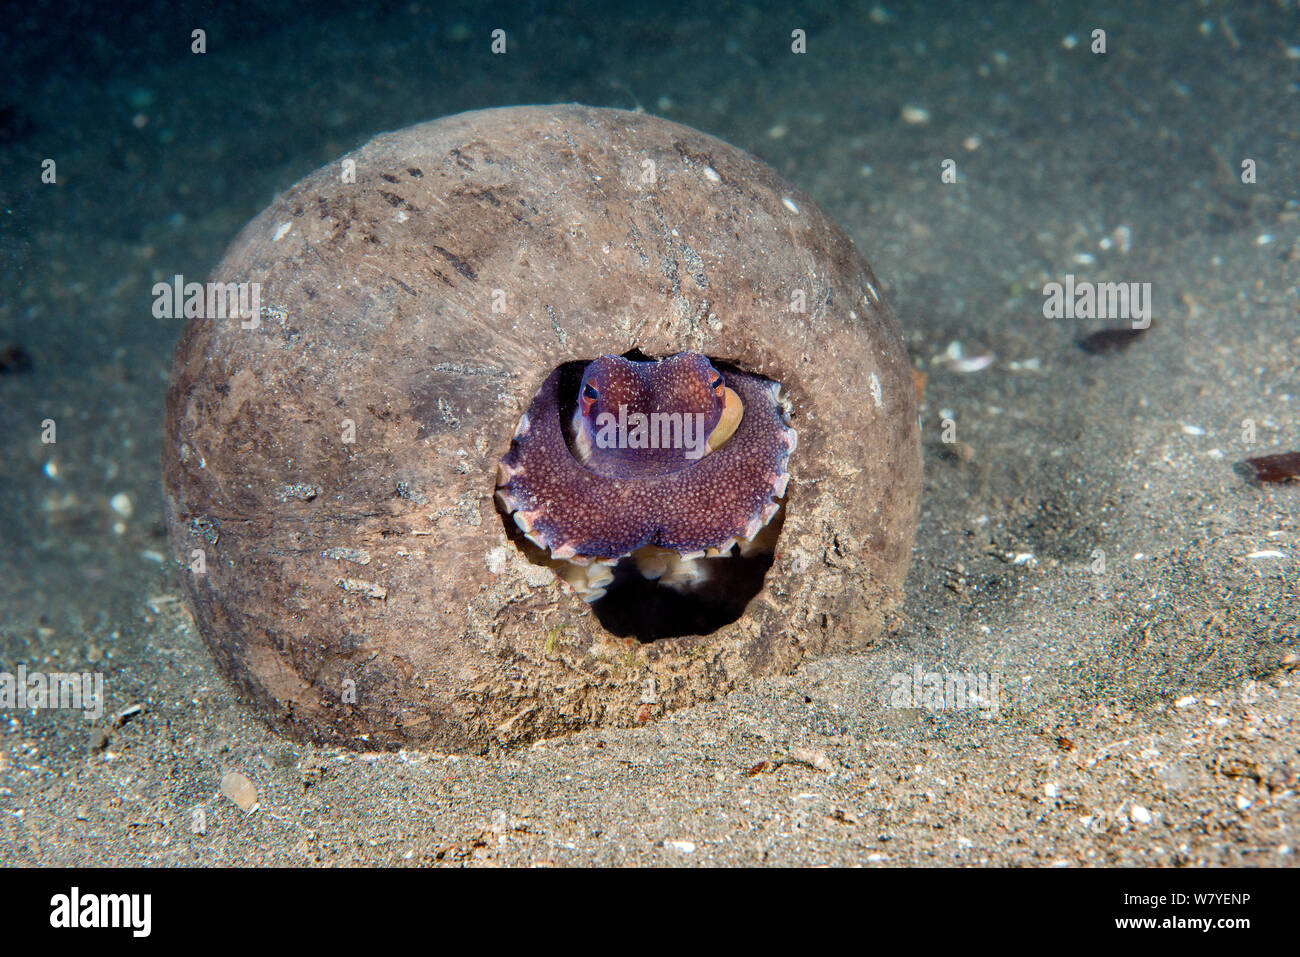 Margined octopus (Amphioctopus marginatus) seeking shelter inside a discarded coconut shell. Lembeh Strait, North Sulawesi, Indonesia. Stock Photo